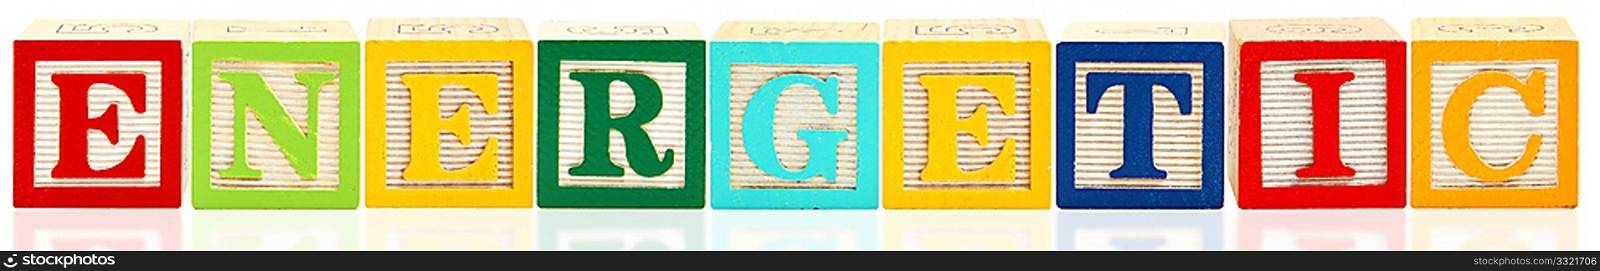 Colorful alphabet blocks spelling the word ENERGETIC